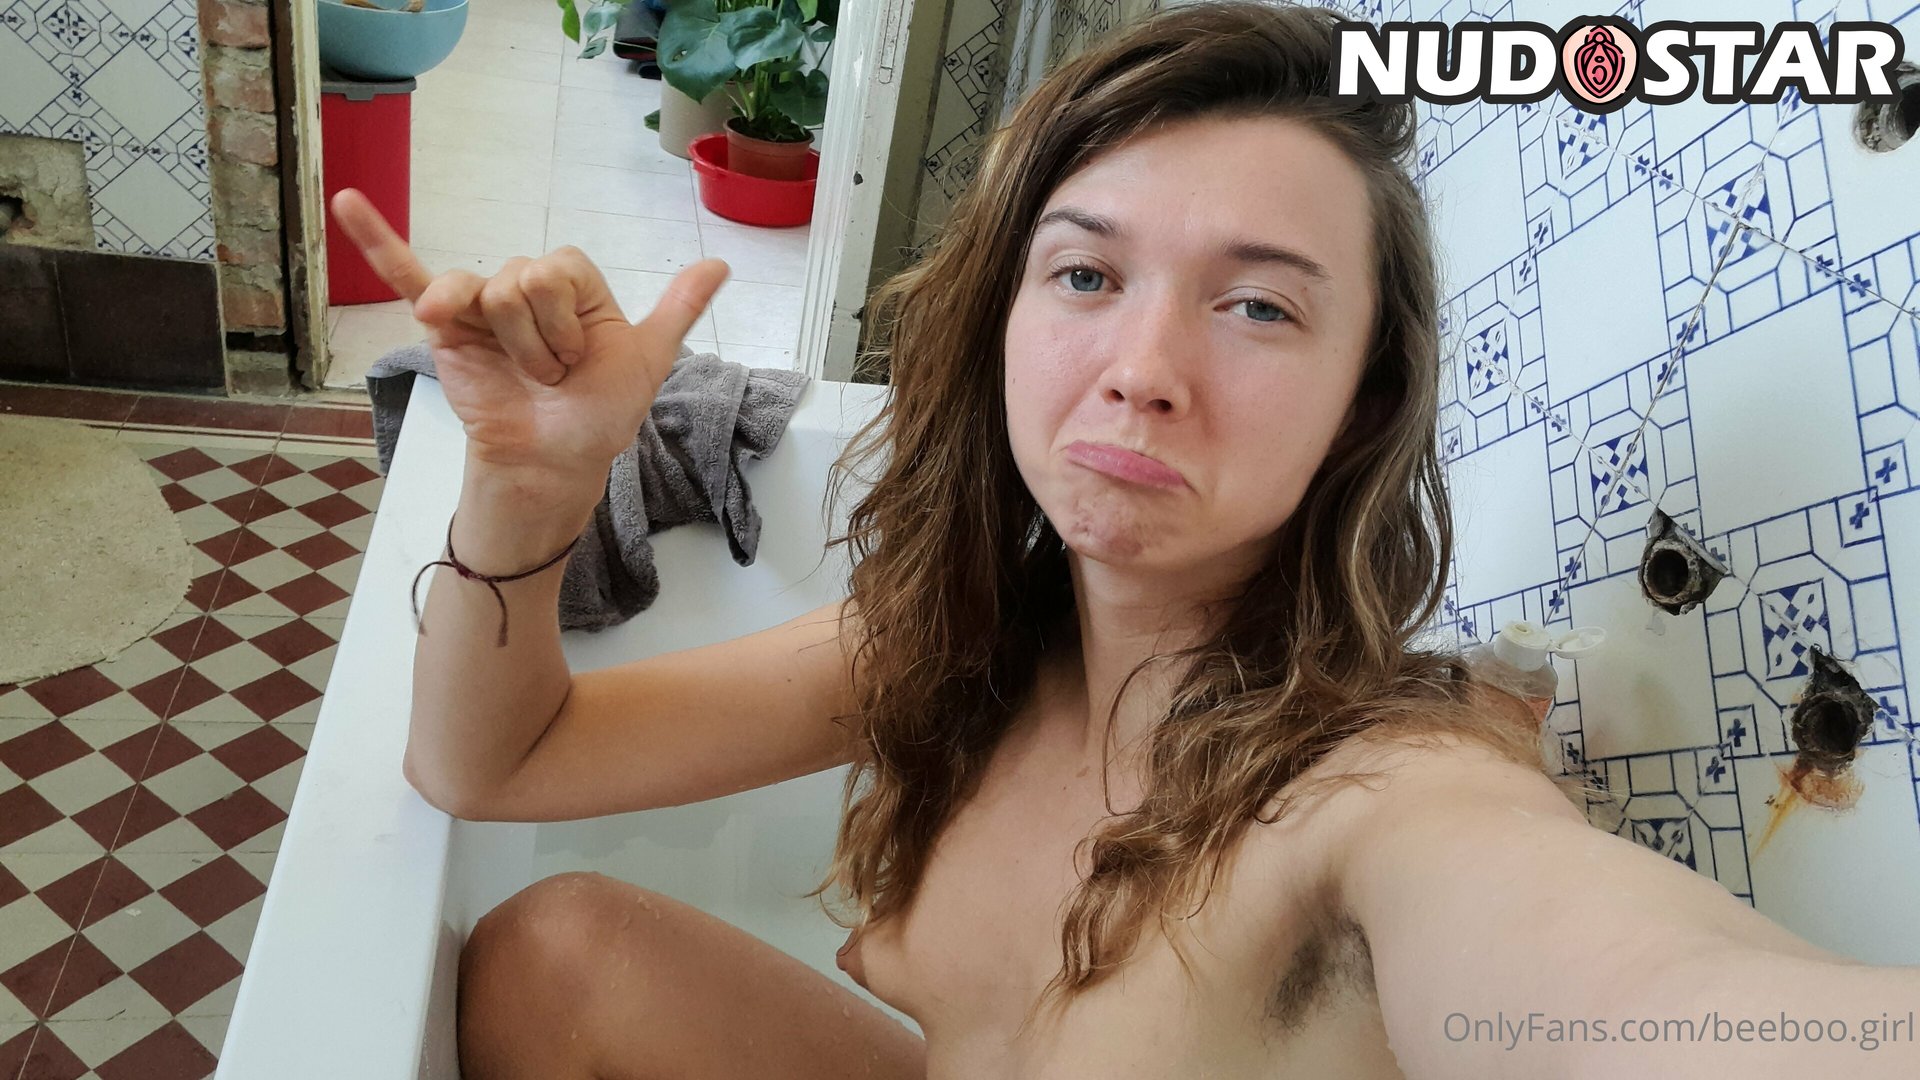 Beeboo_Girl_nude_leaks_nudostar.com_051.jpg